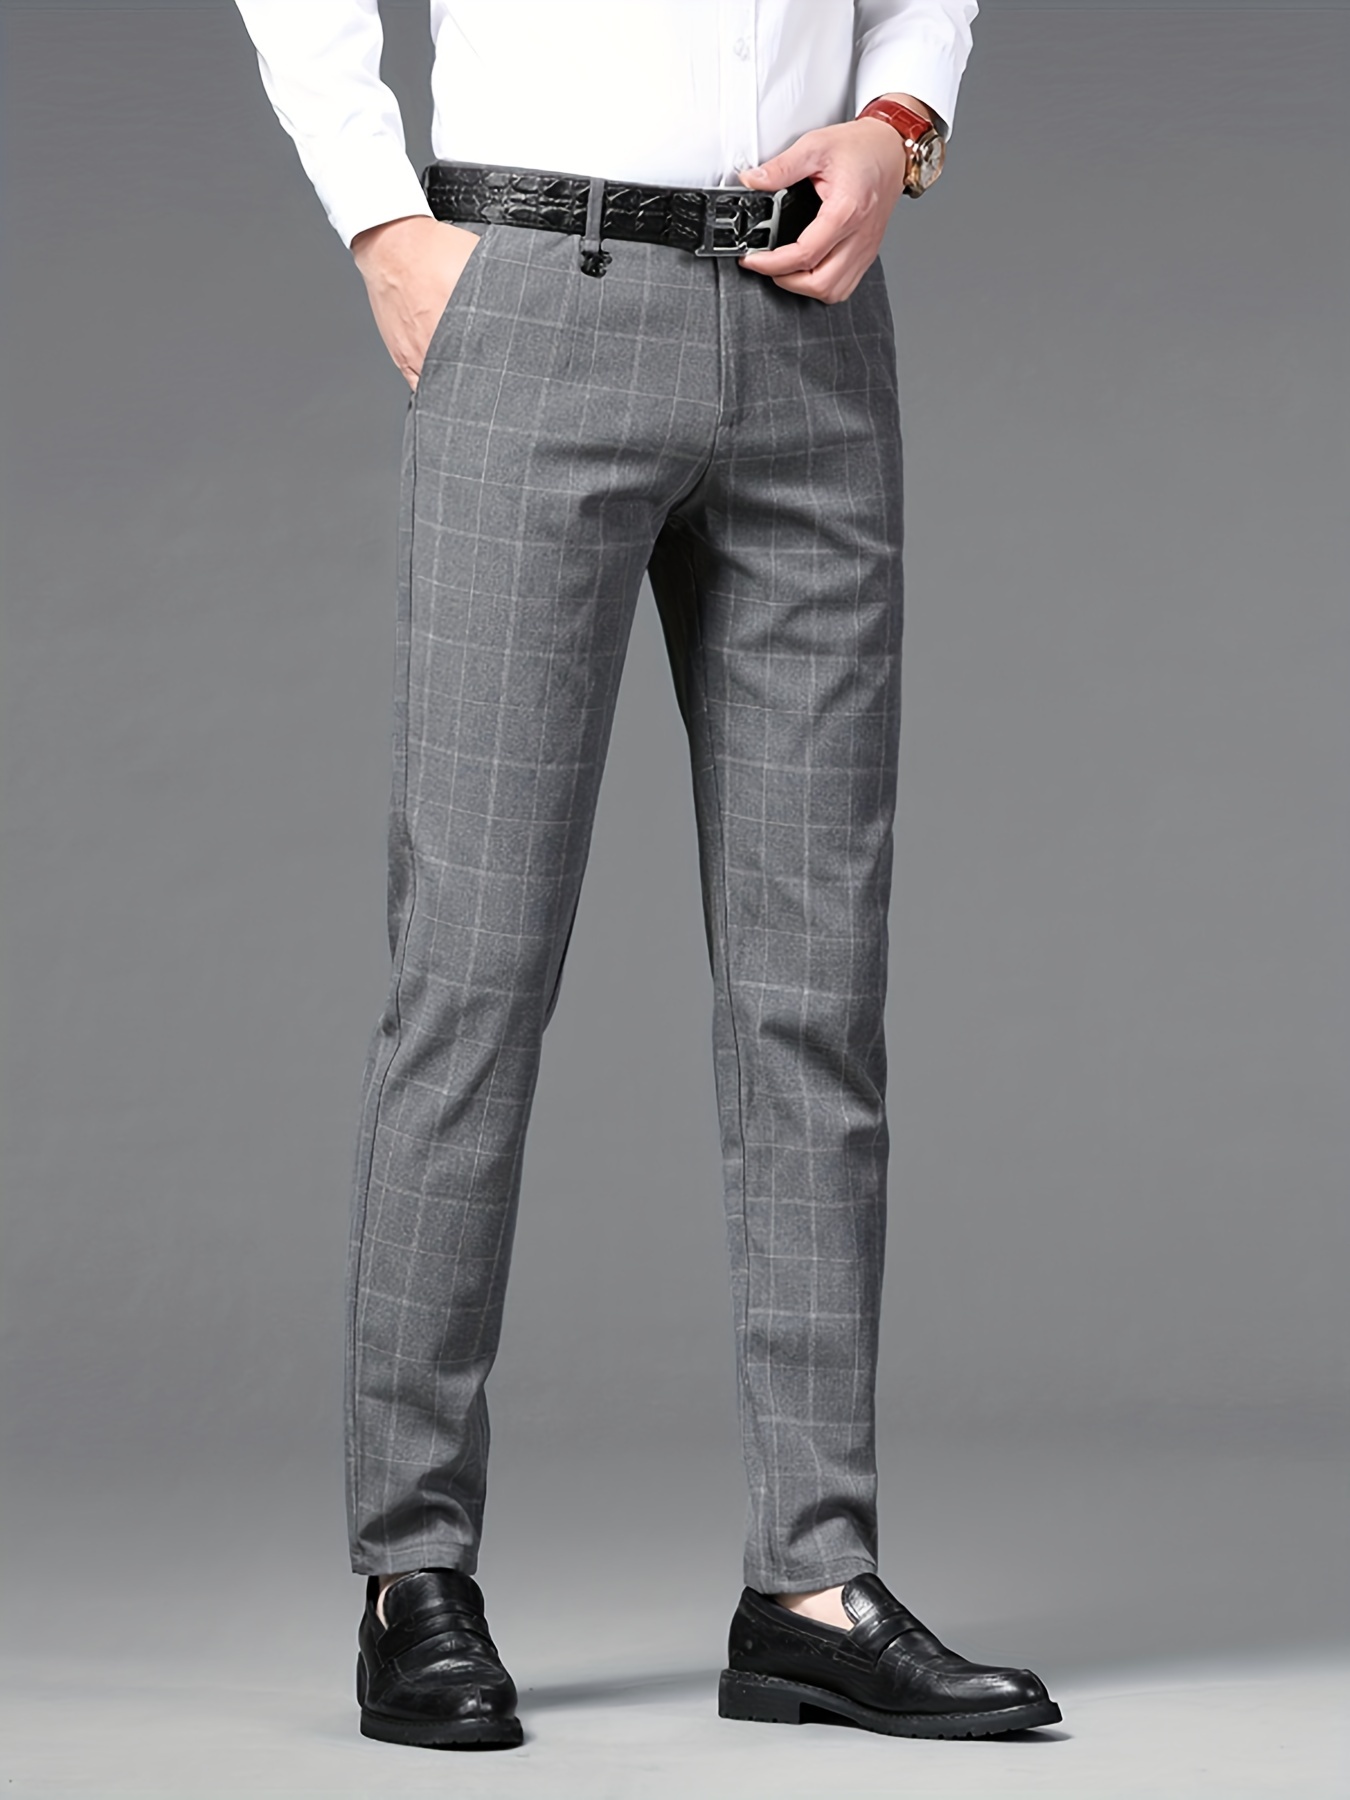 Grey Mens Dress Pants and Slacks